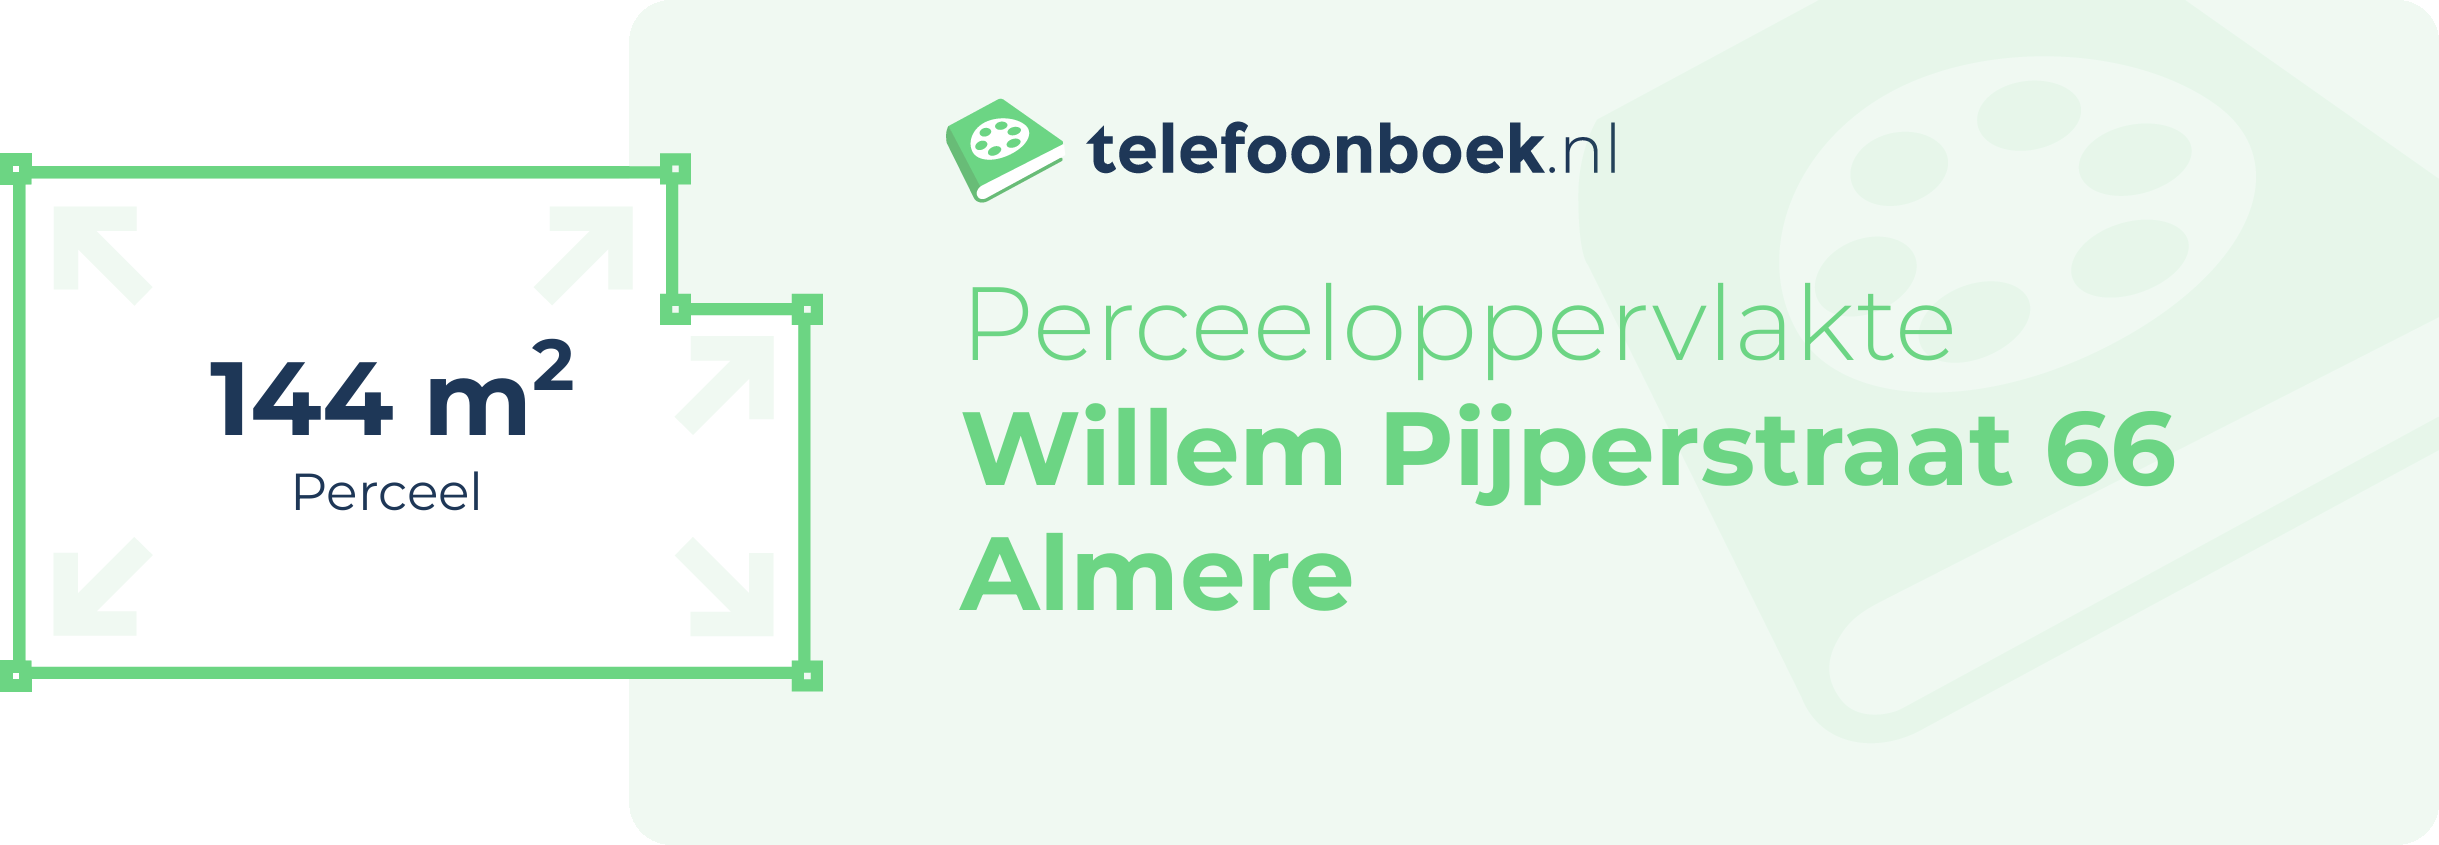 Perceeloppervlakte Willem Pijperstraat 66 Almere